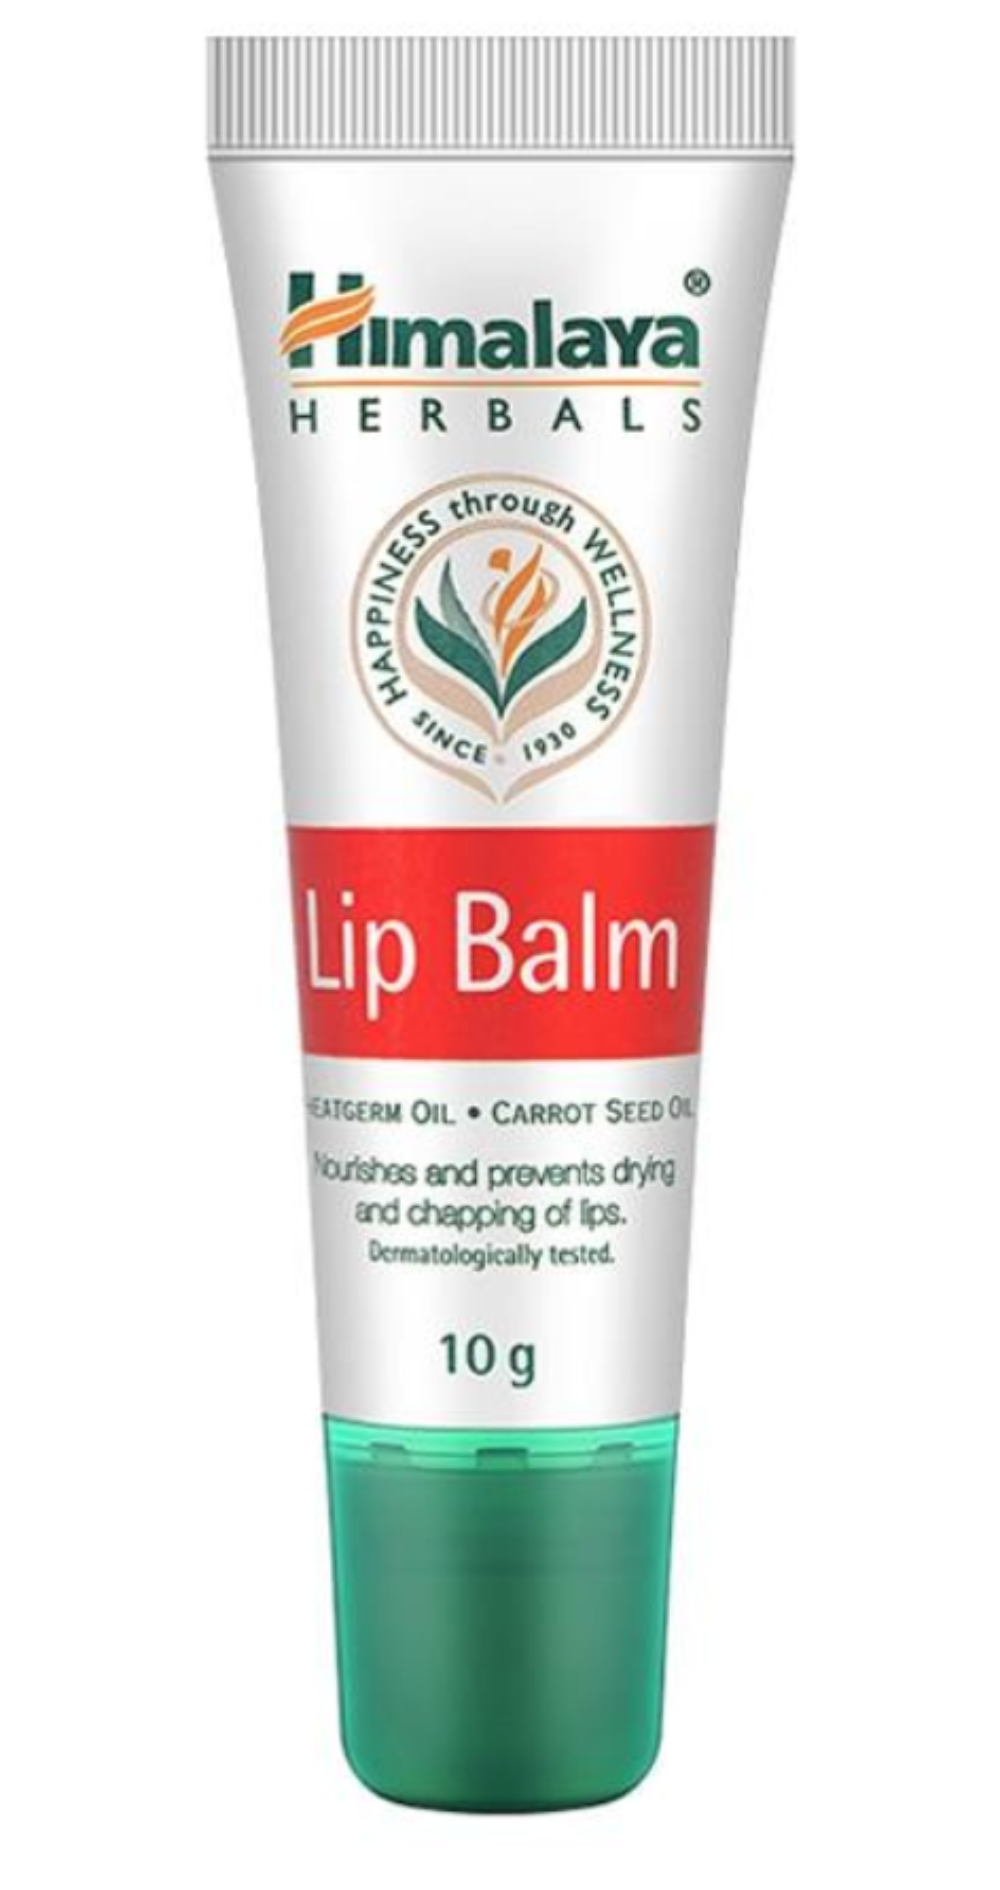 Original Himalaya Herbals Lip Balm 10g